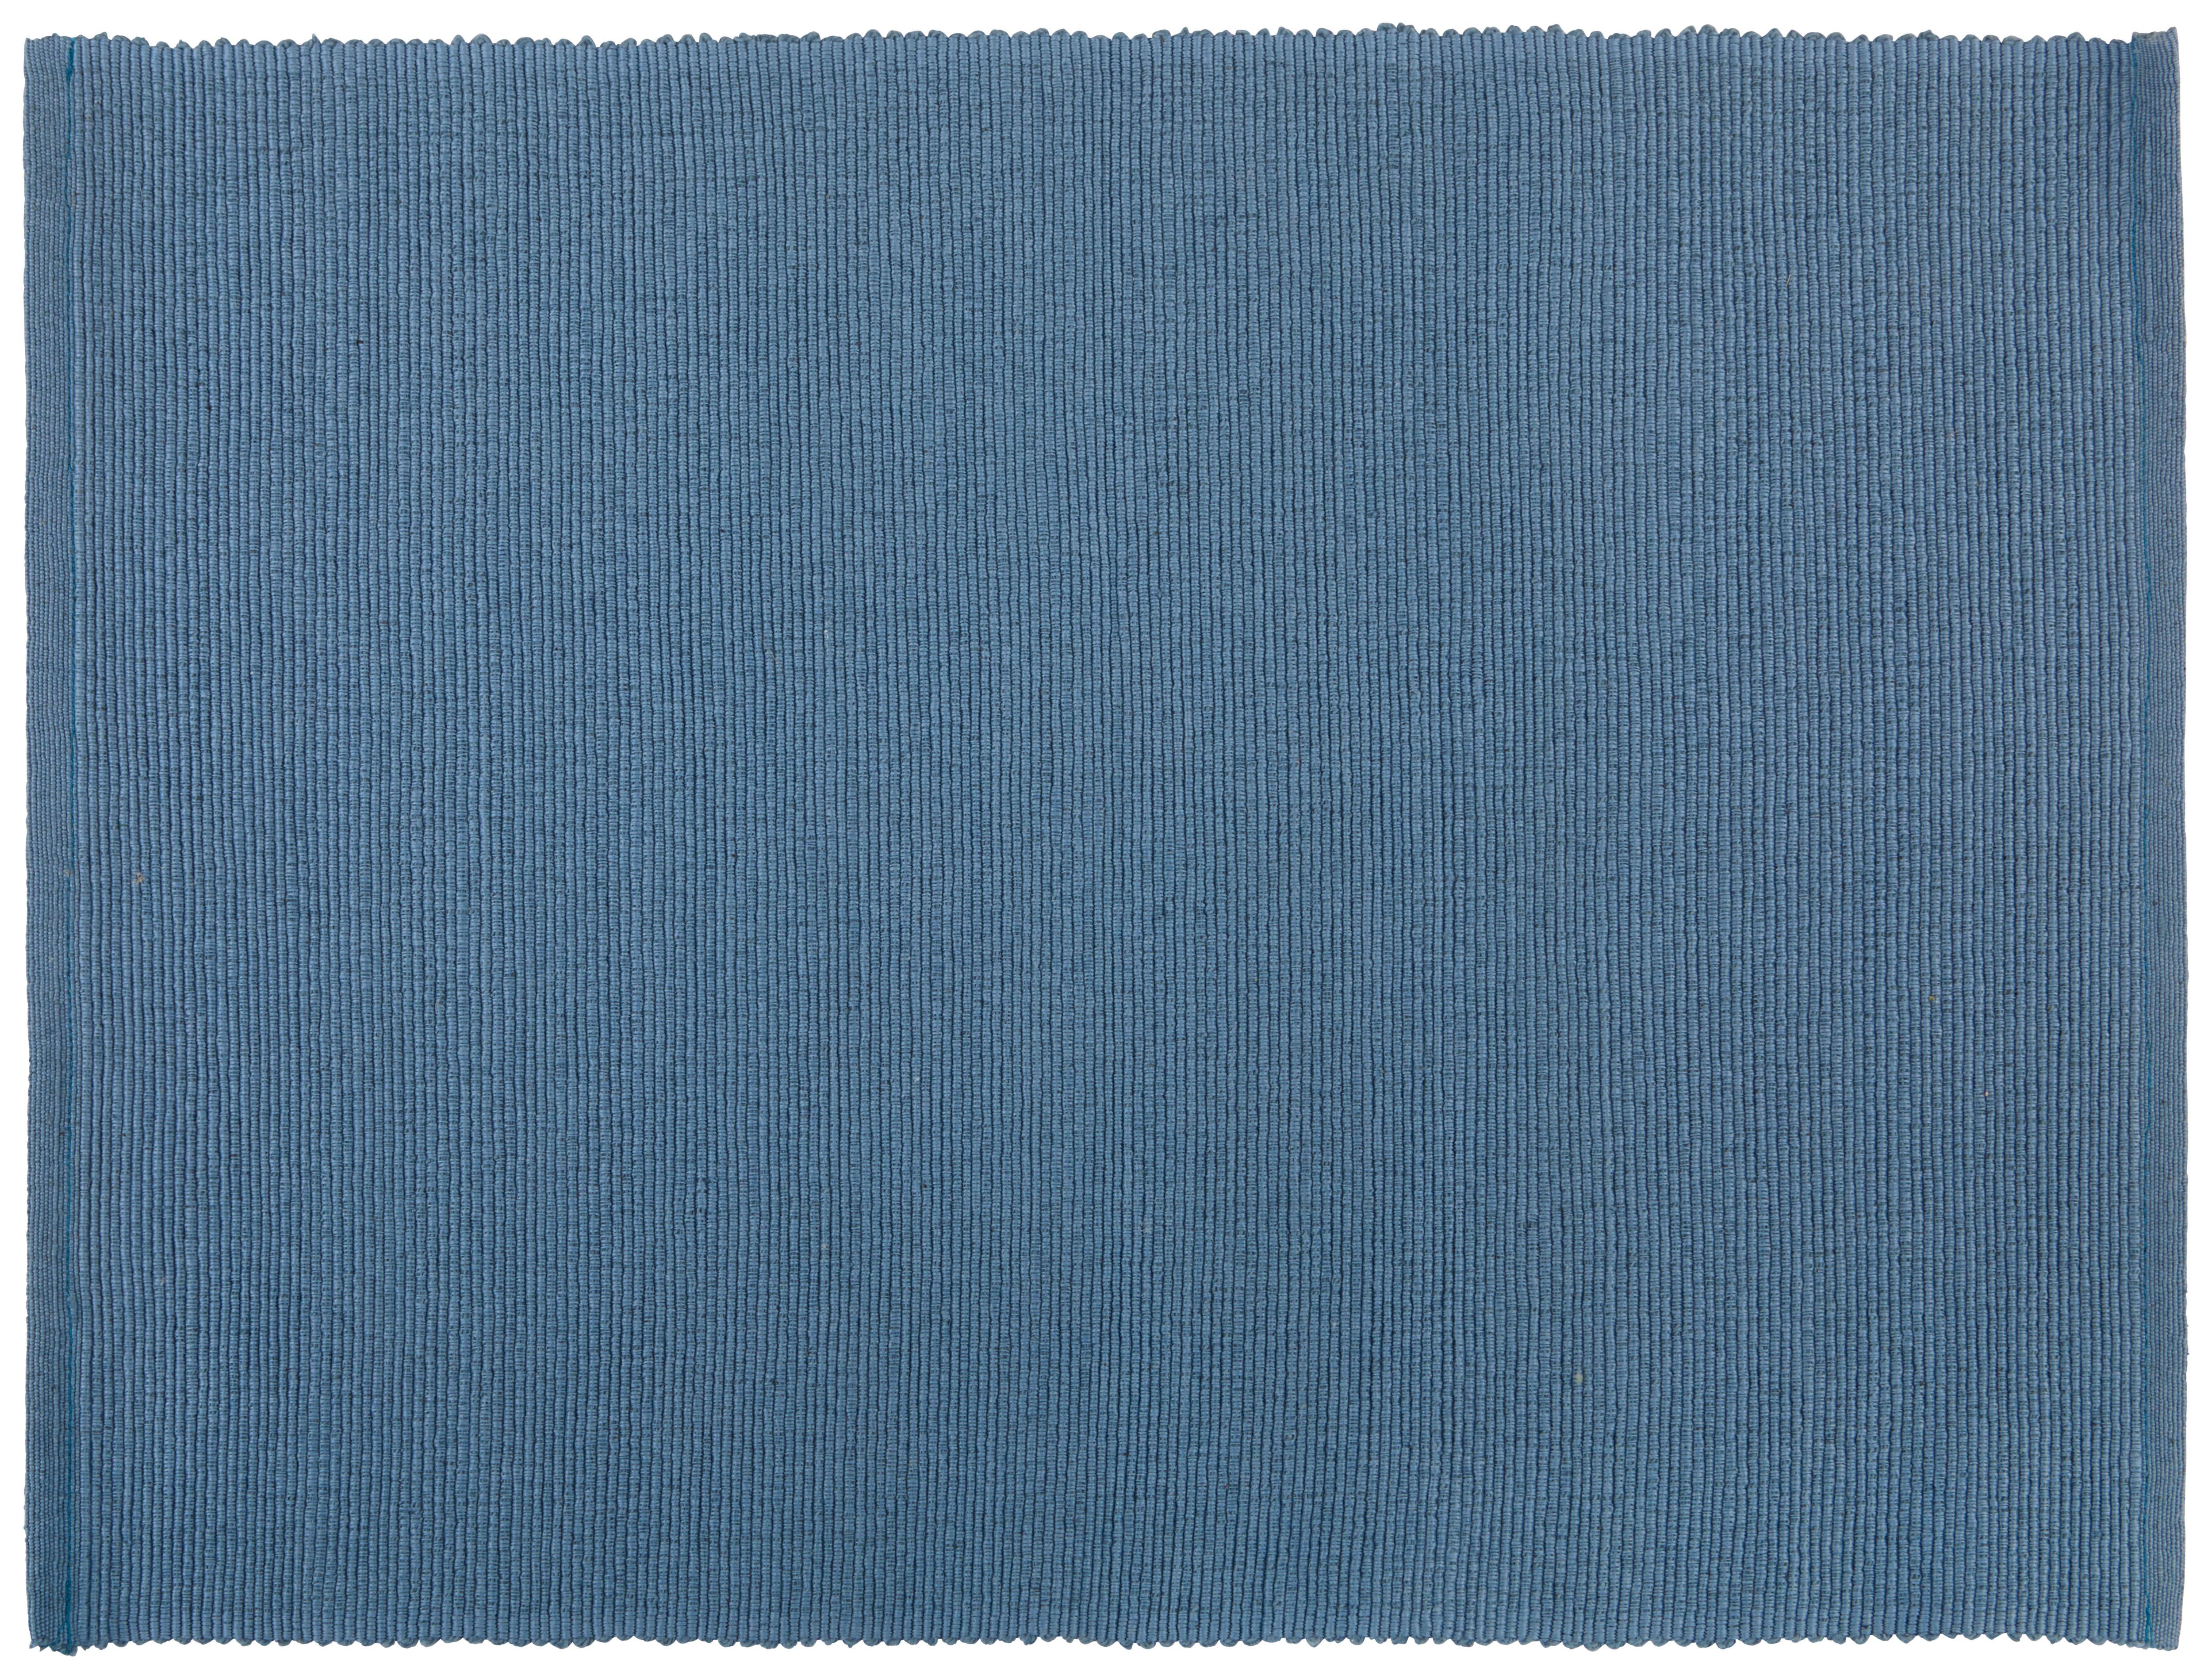 Prestieranie Maren, 33/45cm, Modrá - modrá, textil (33/45cm) - Based